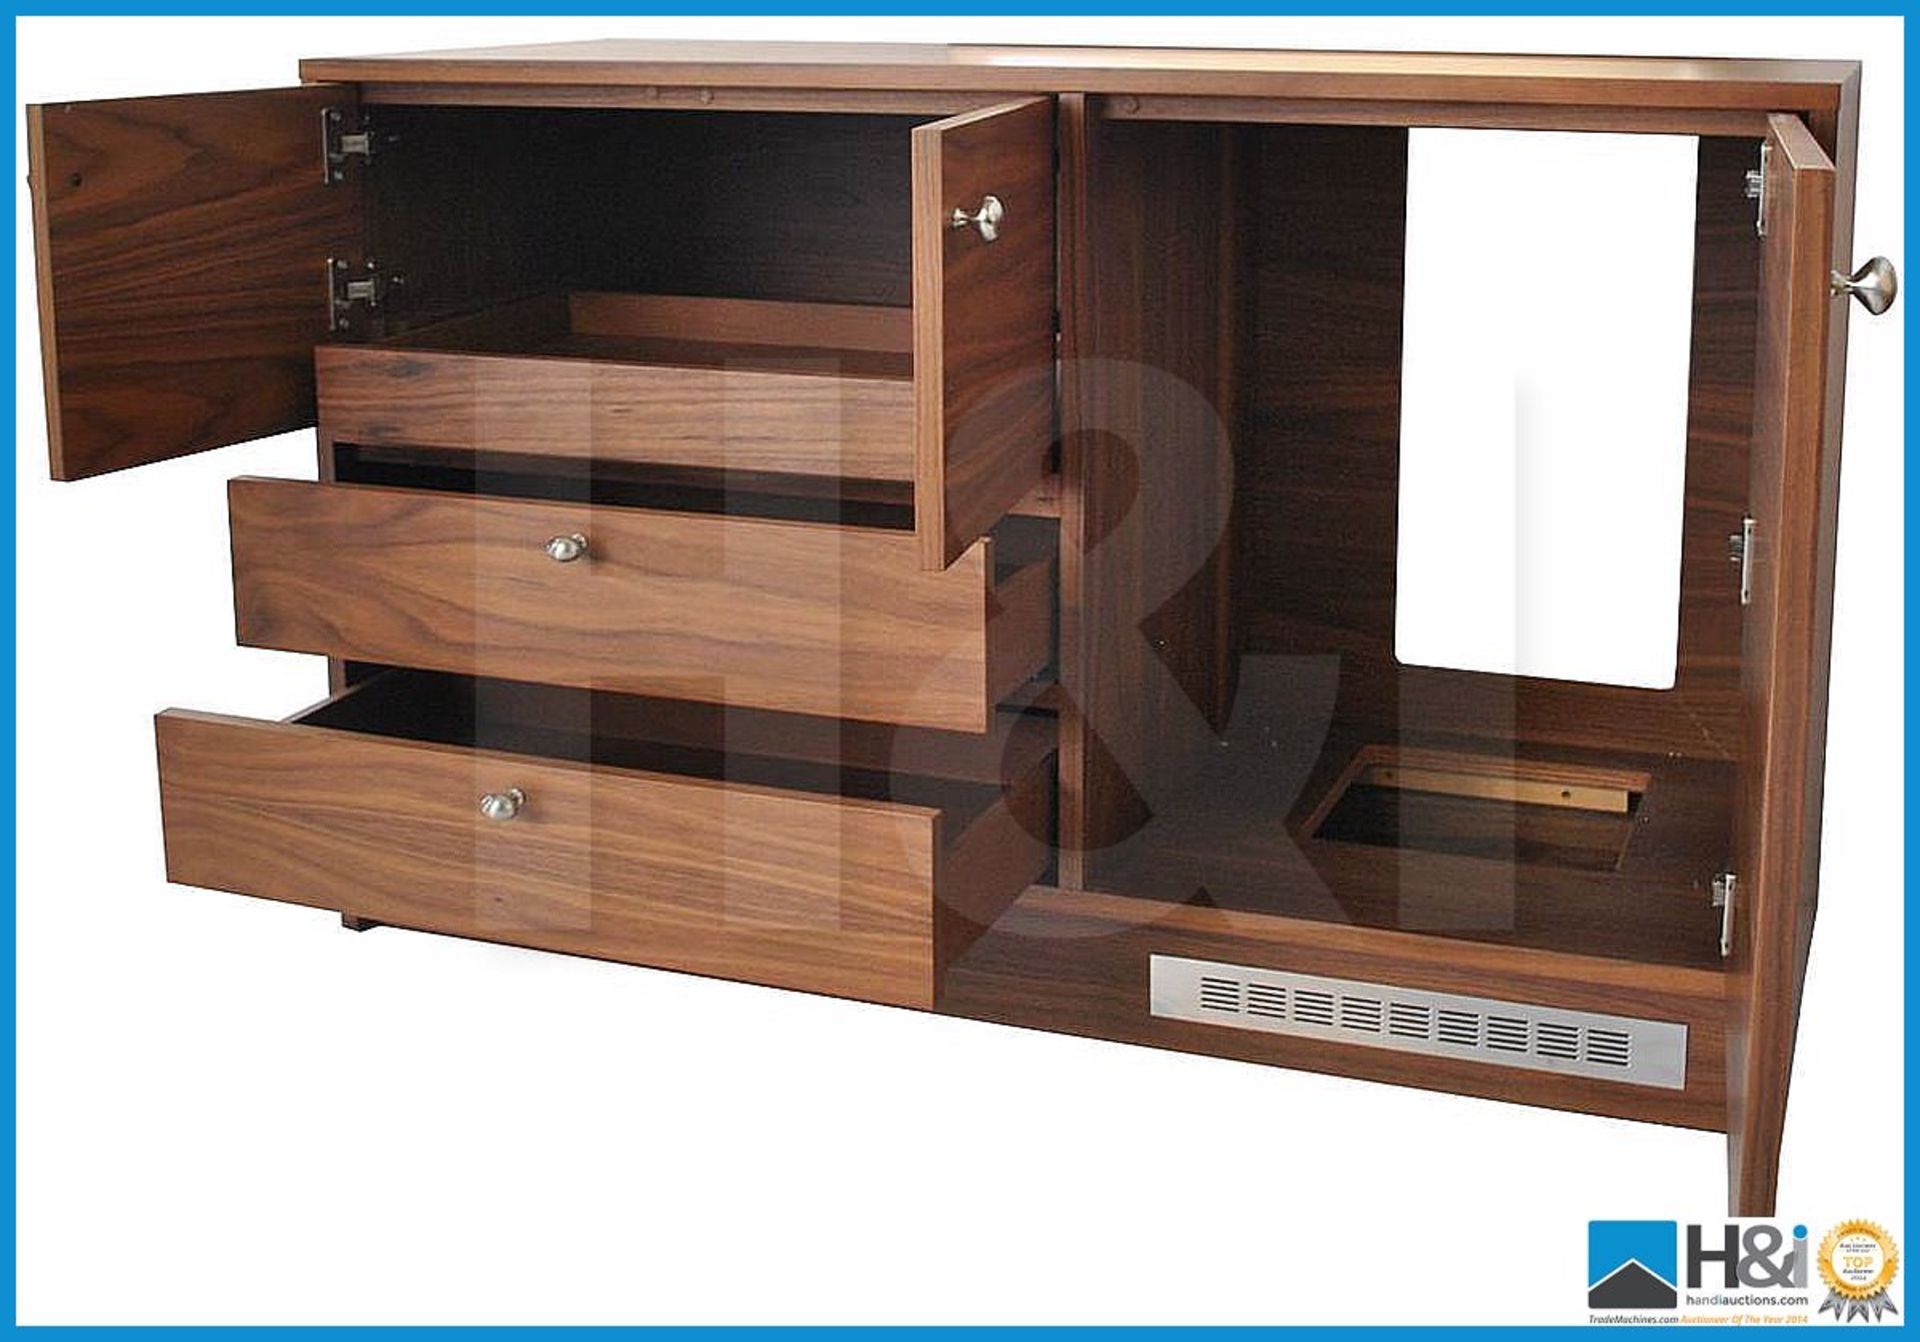 Stunning black walnut bedroom furniture set comprising: 2-door wardrobe - H 193cm x W 110cm - Image 6 of 10